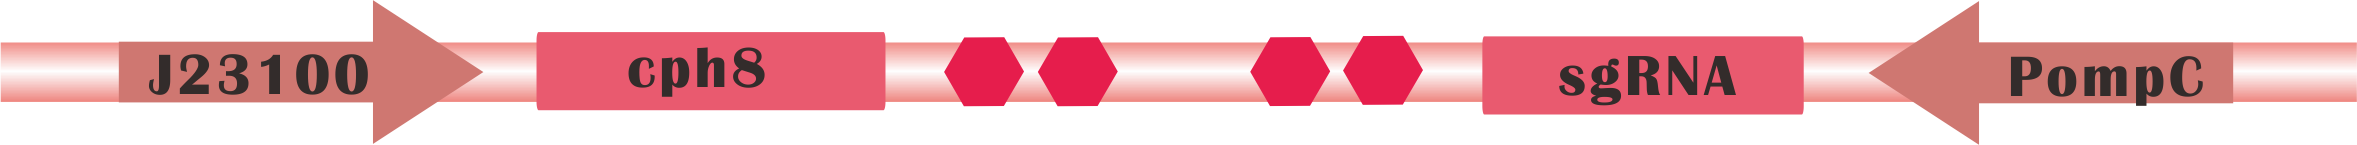 Fig.3 Final version of Red sensing system